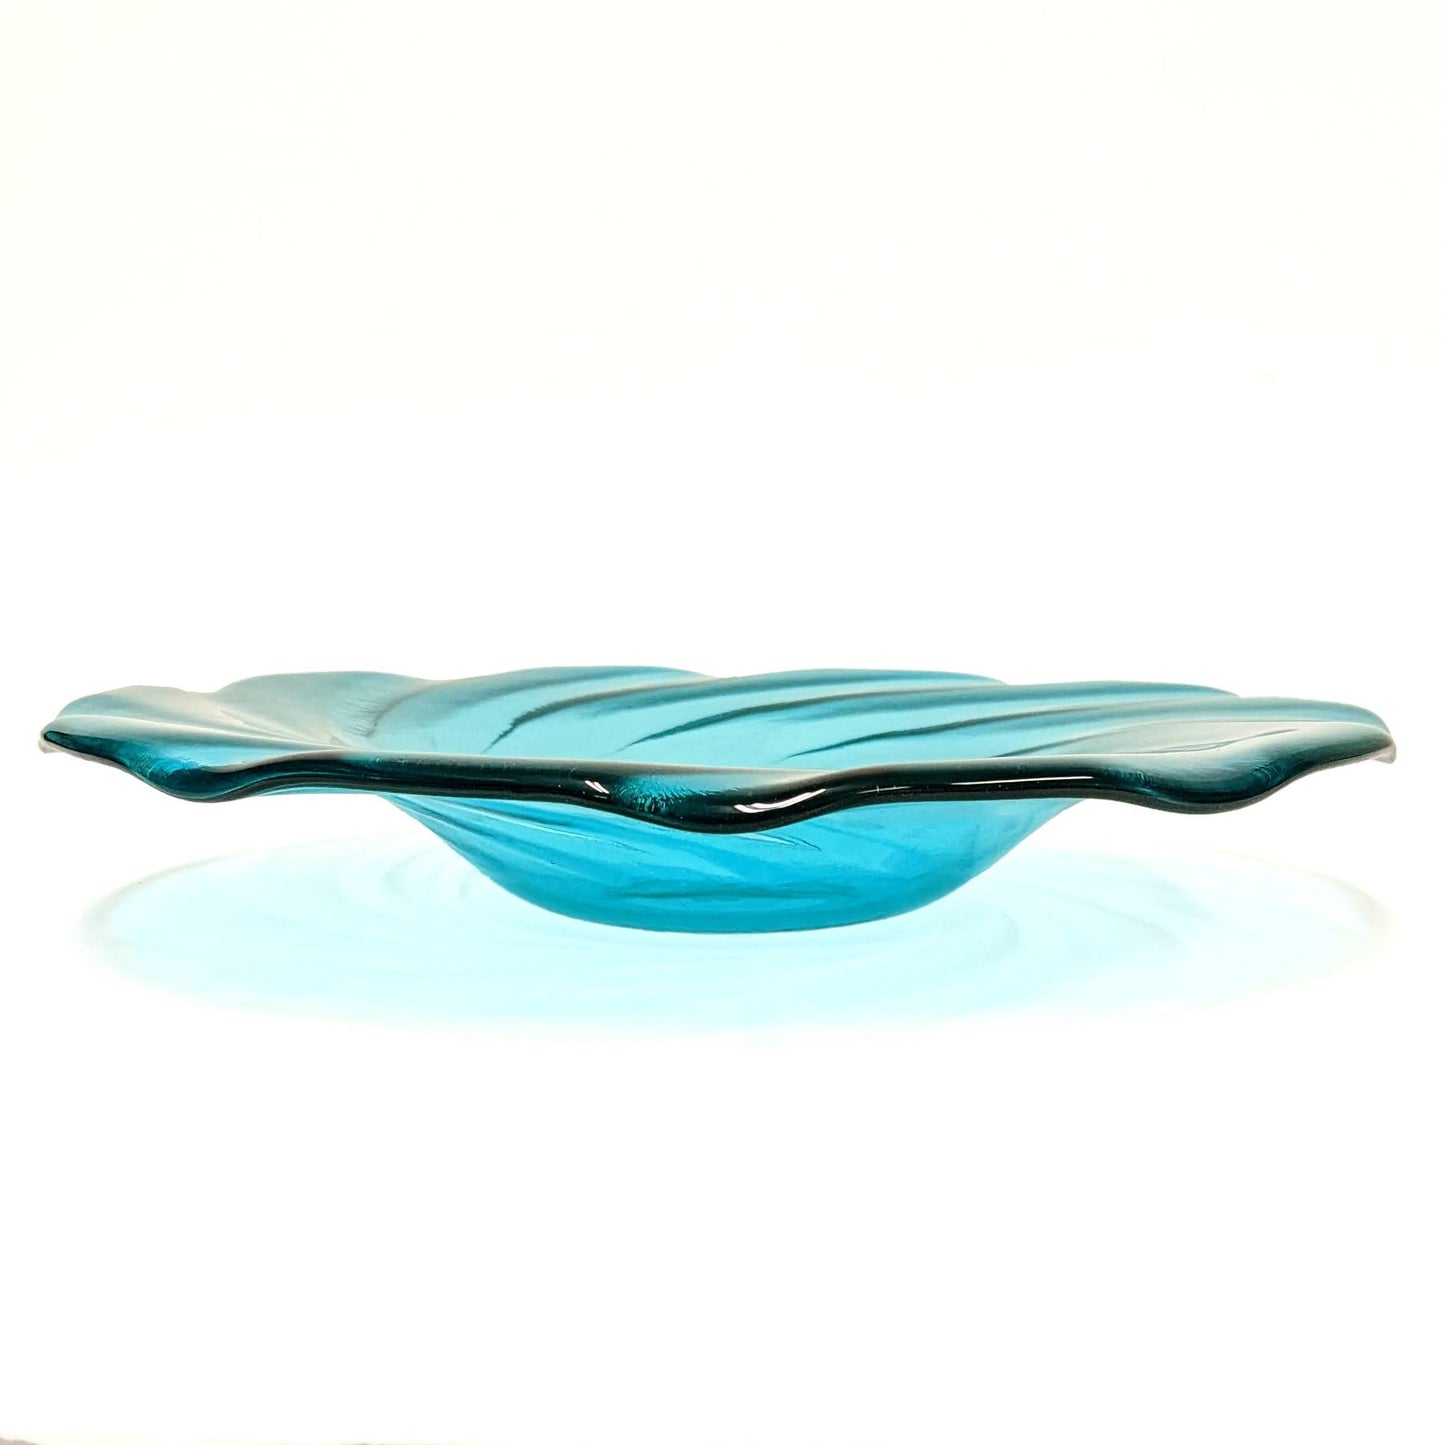 Glass Art Fruit Bowl in Aquamarine Blue Green